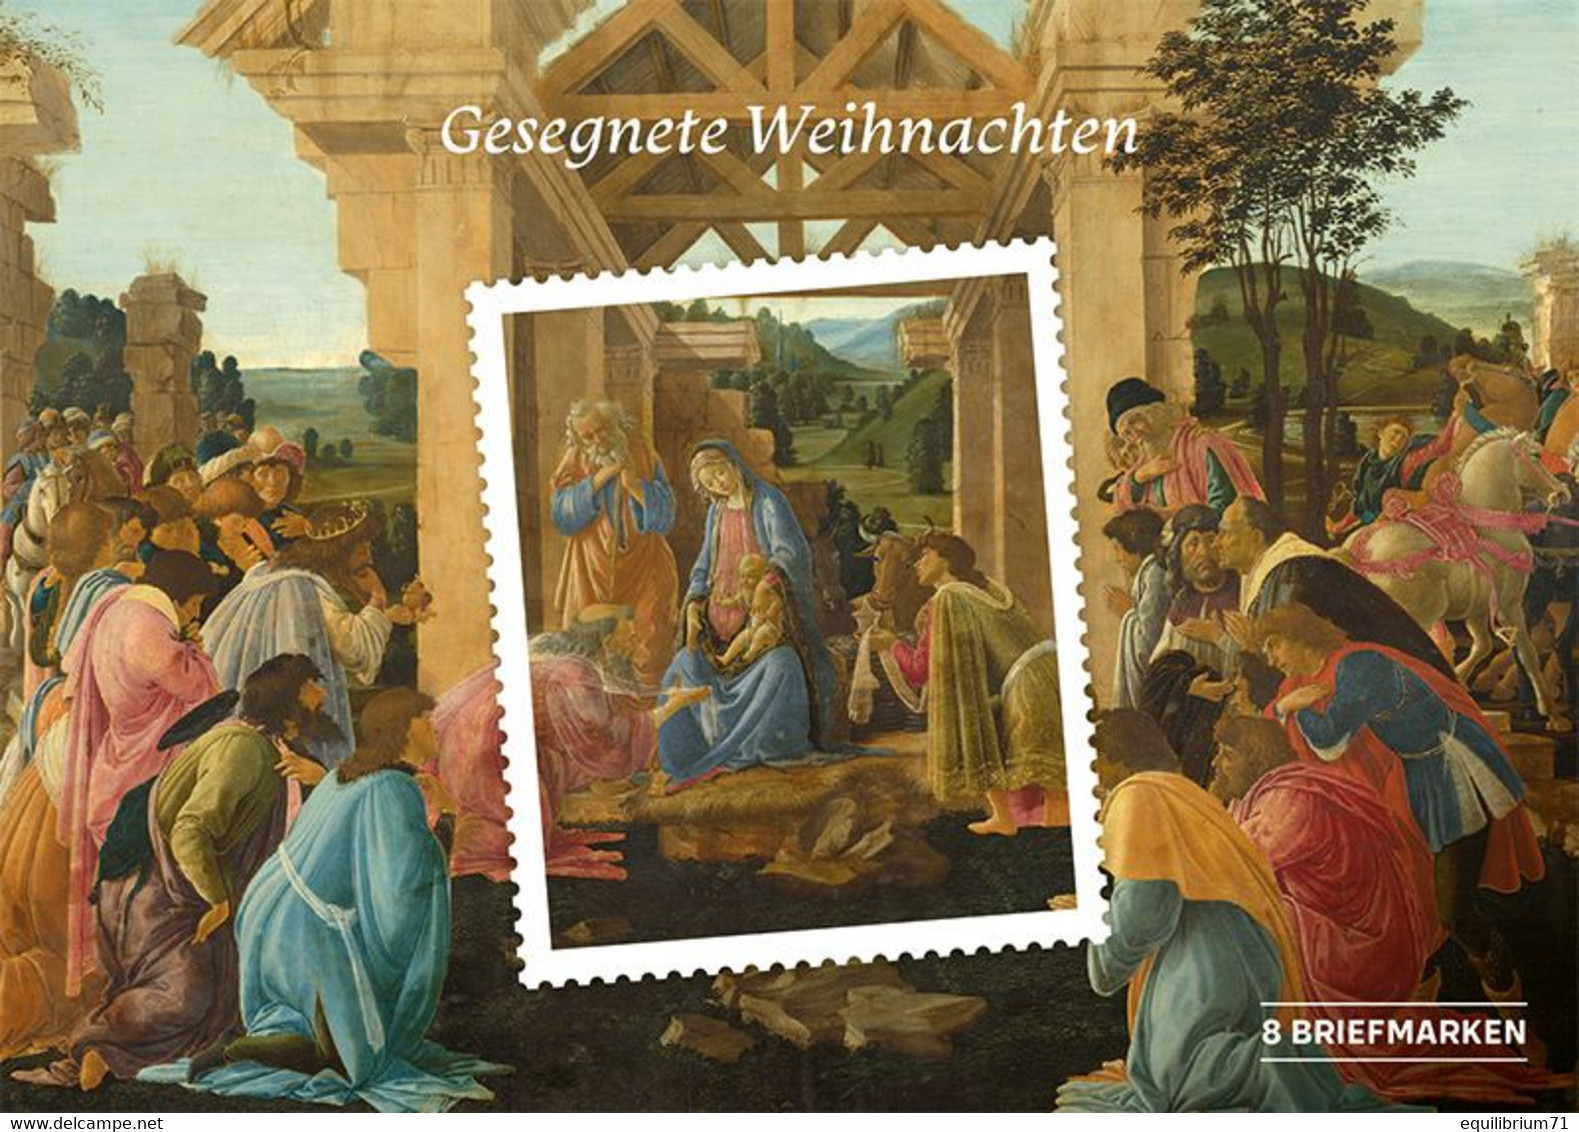 Autriche** - Timbres De Noël / Kerst Postzegels / Weihnachtsmarken / Christmas Stamps - Gemälde